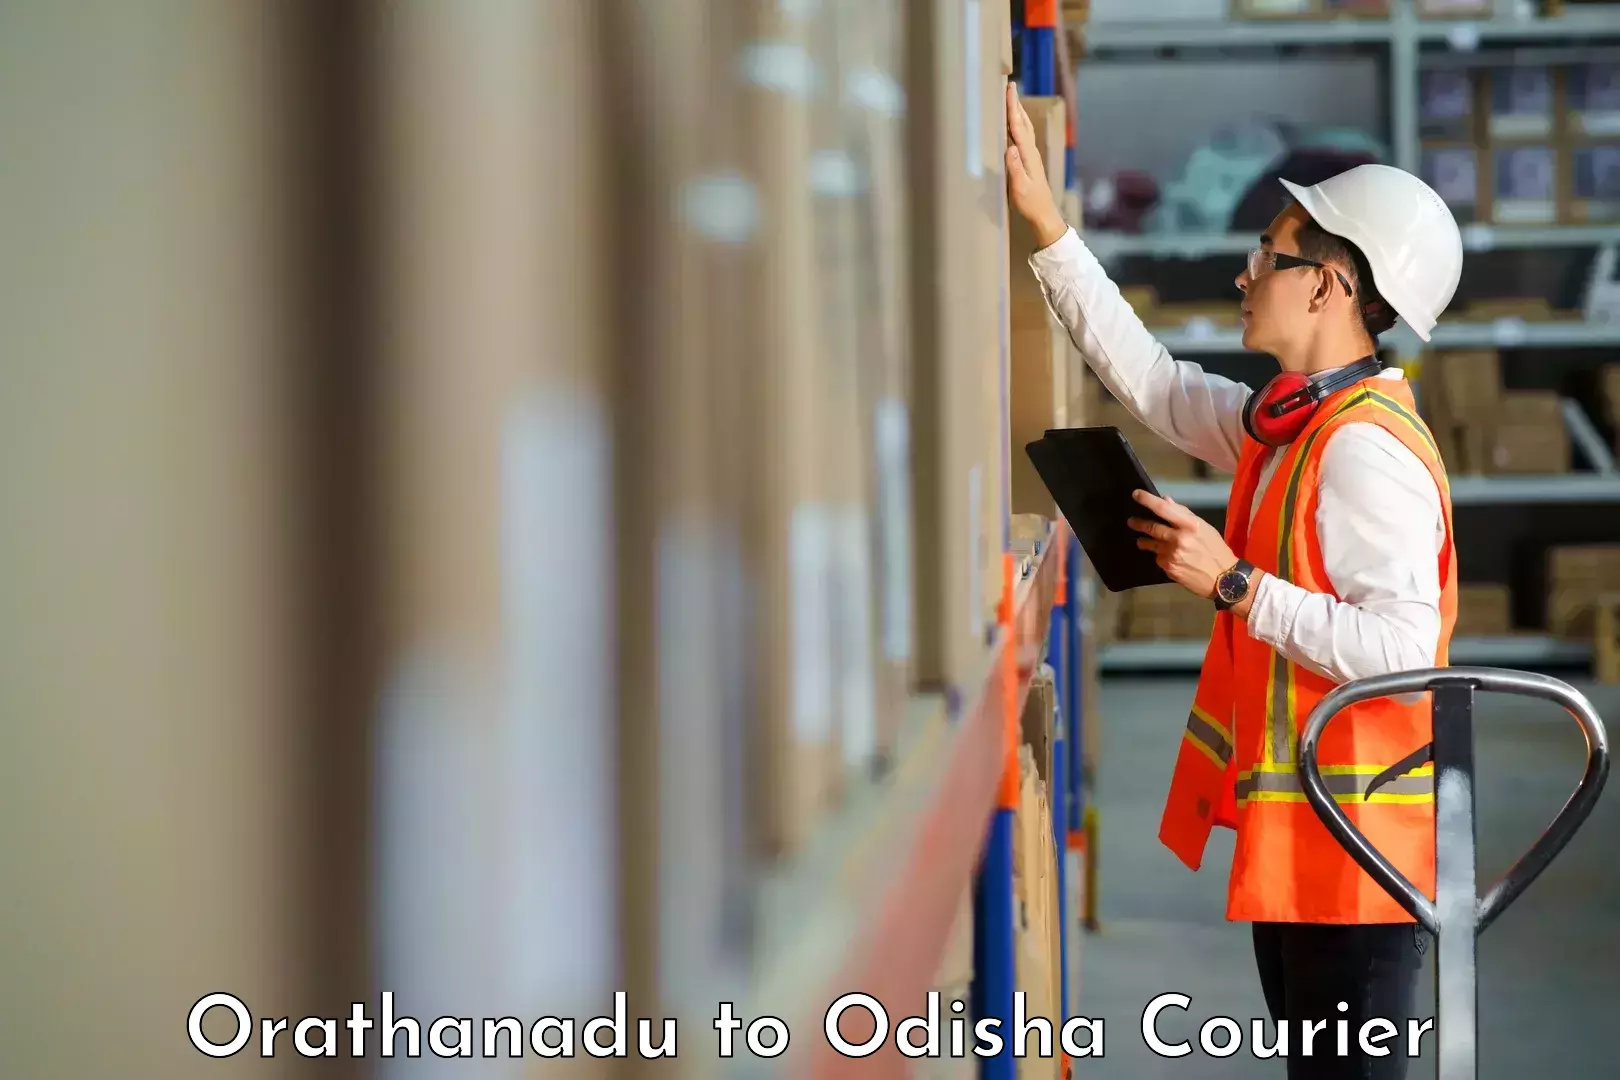 Courier service efficiency in Orathanadu to Kantamal